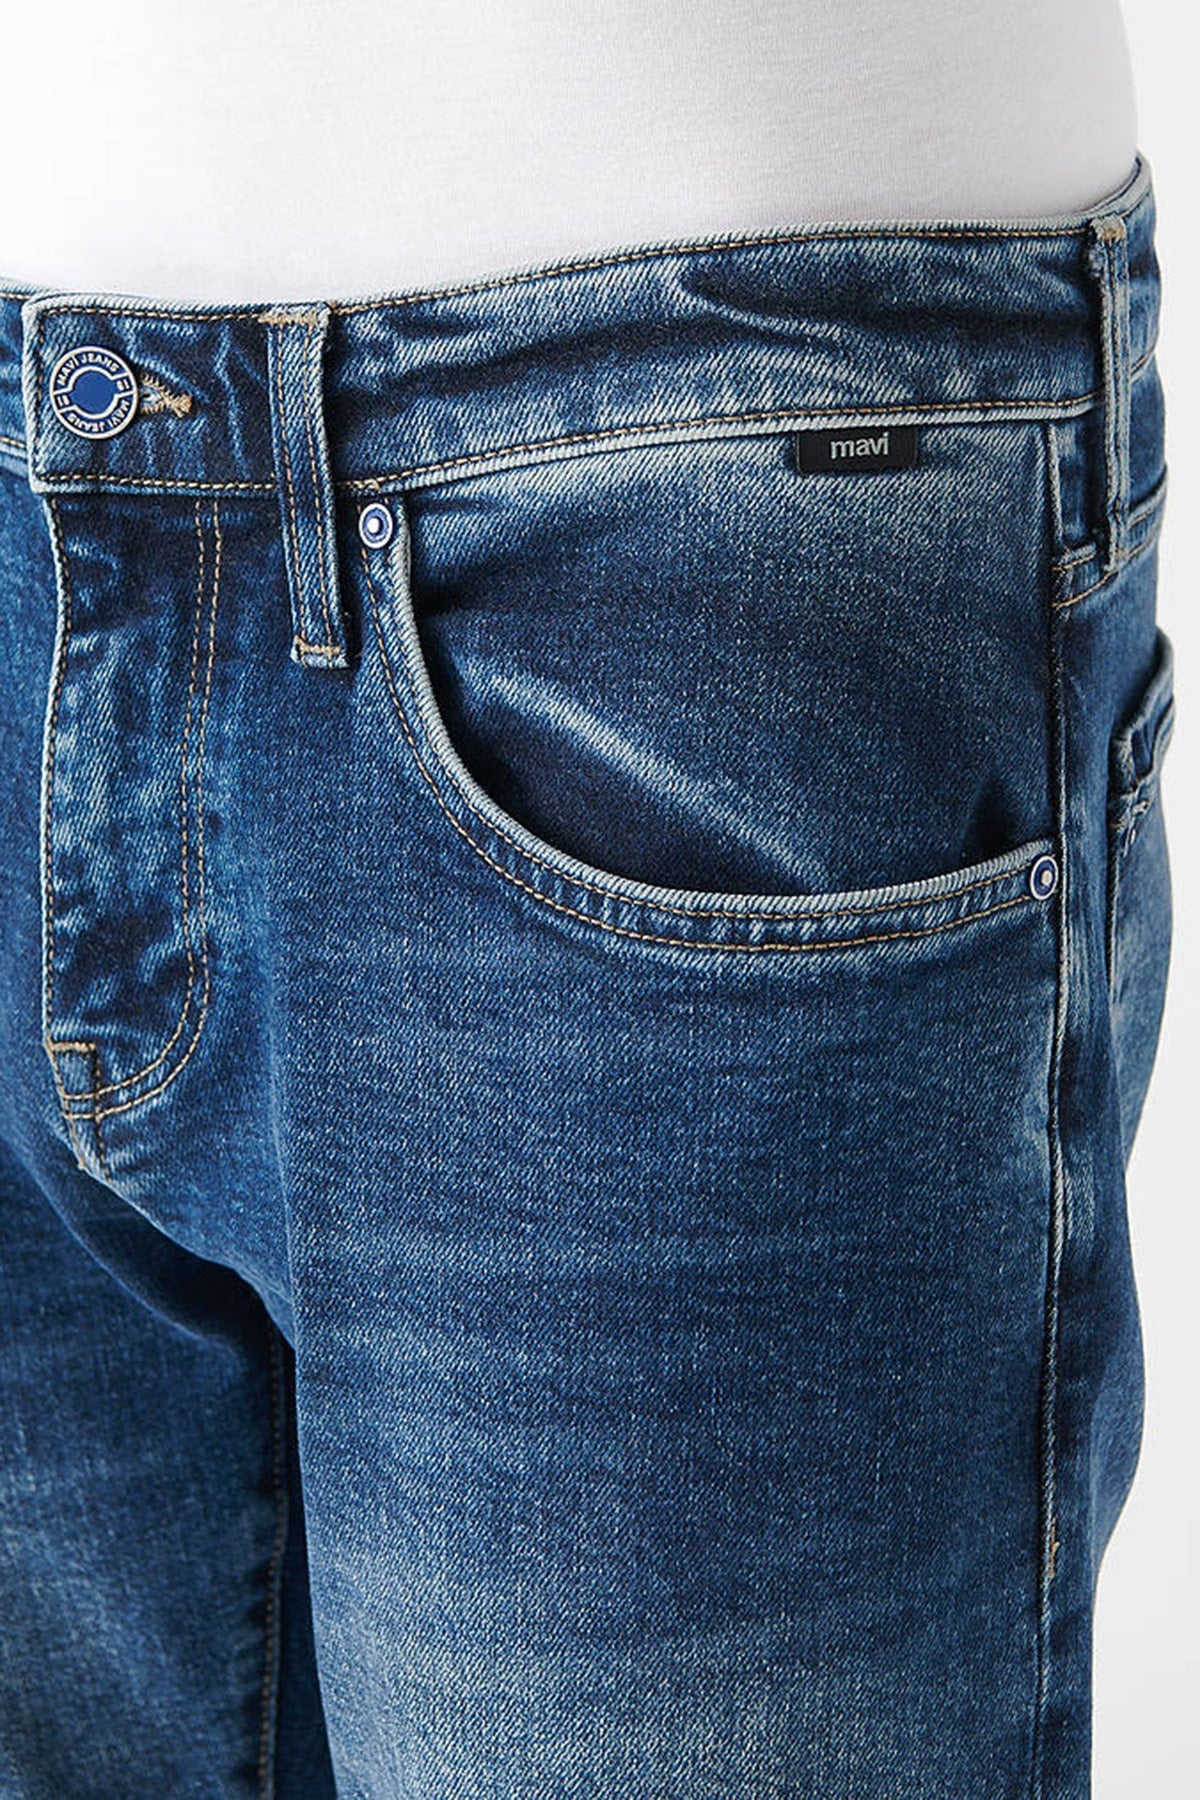 Mavi Jake Pamuklu Normal Bel Skinny Fit Dar Paça Jeans Erkek Kot Pantolon 0042283028 MAVİ